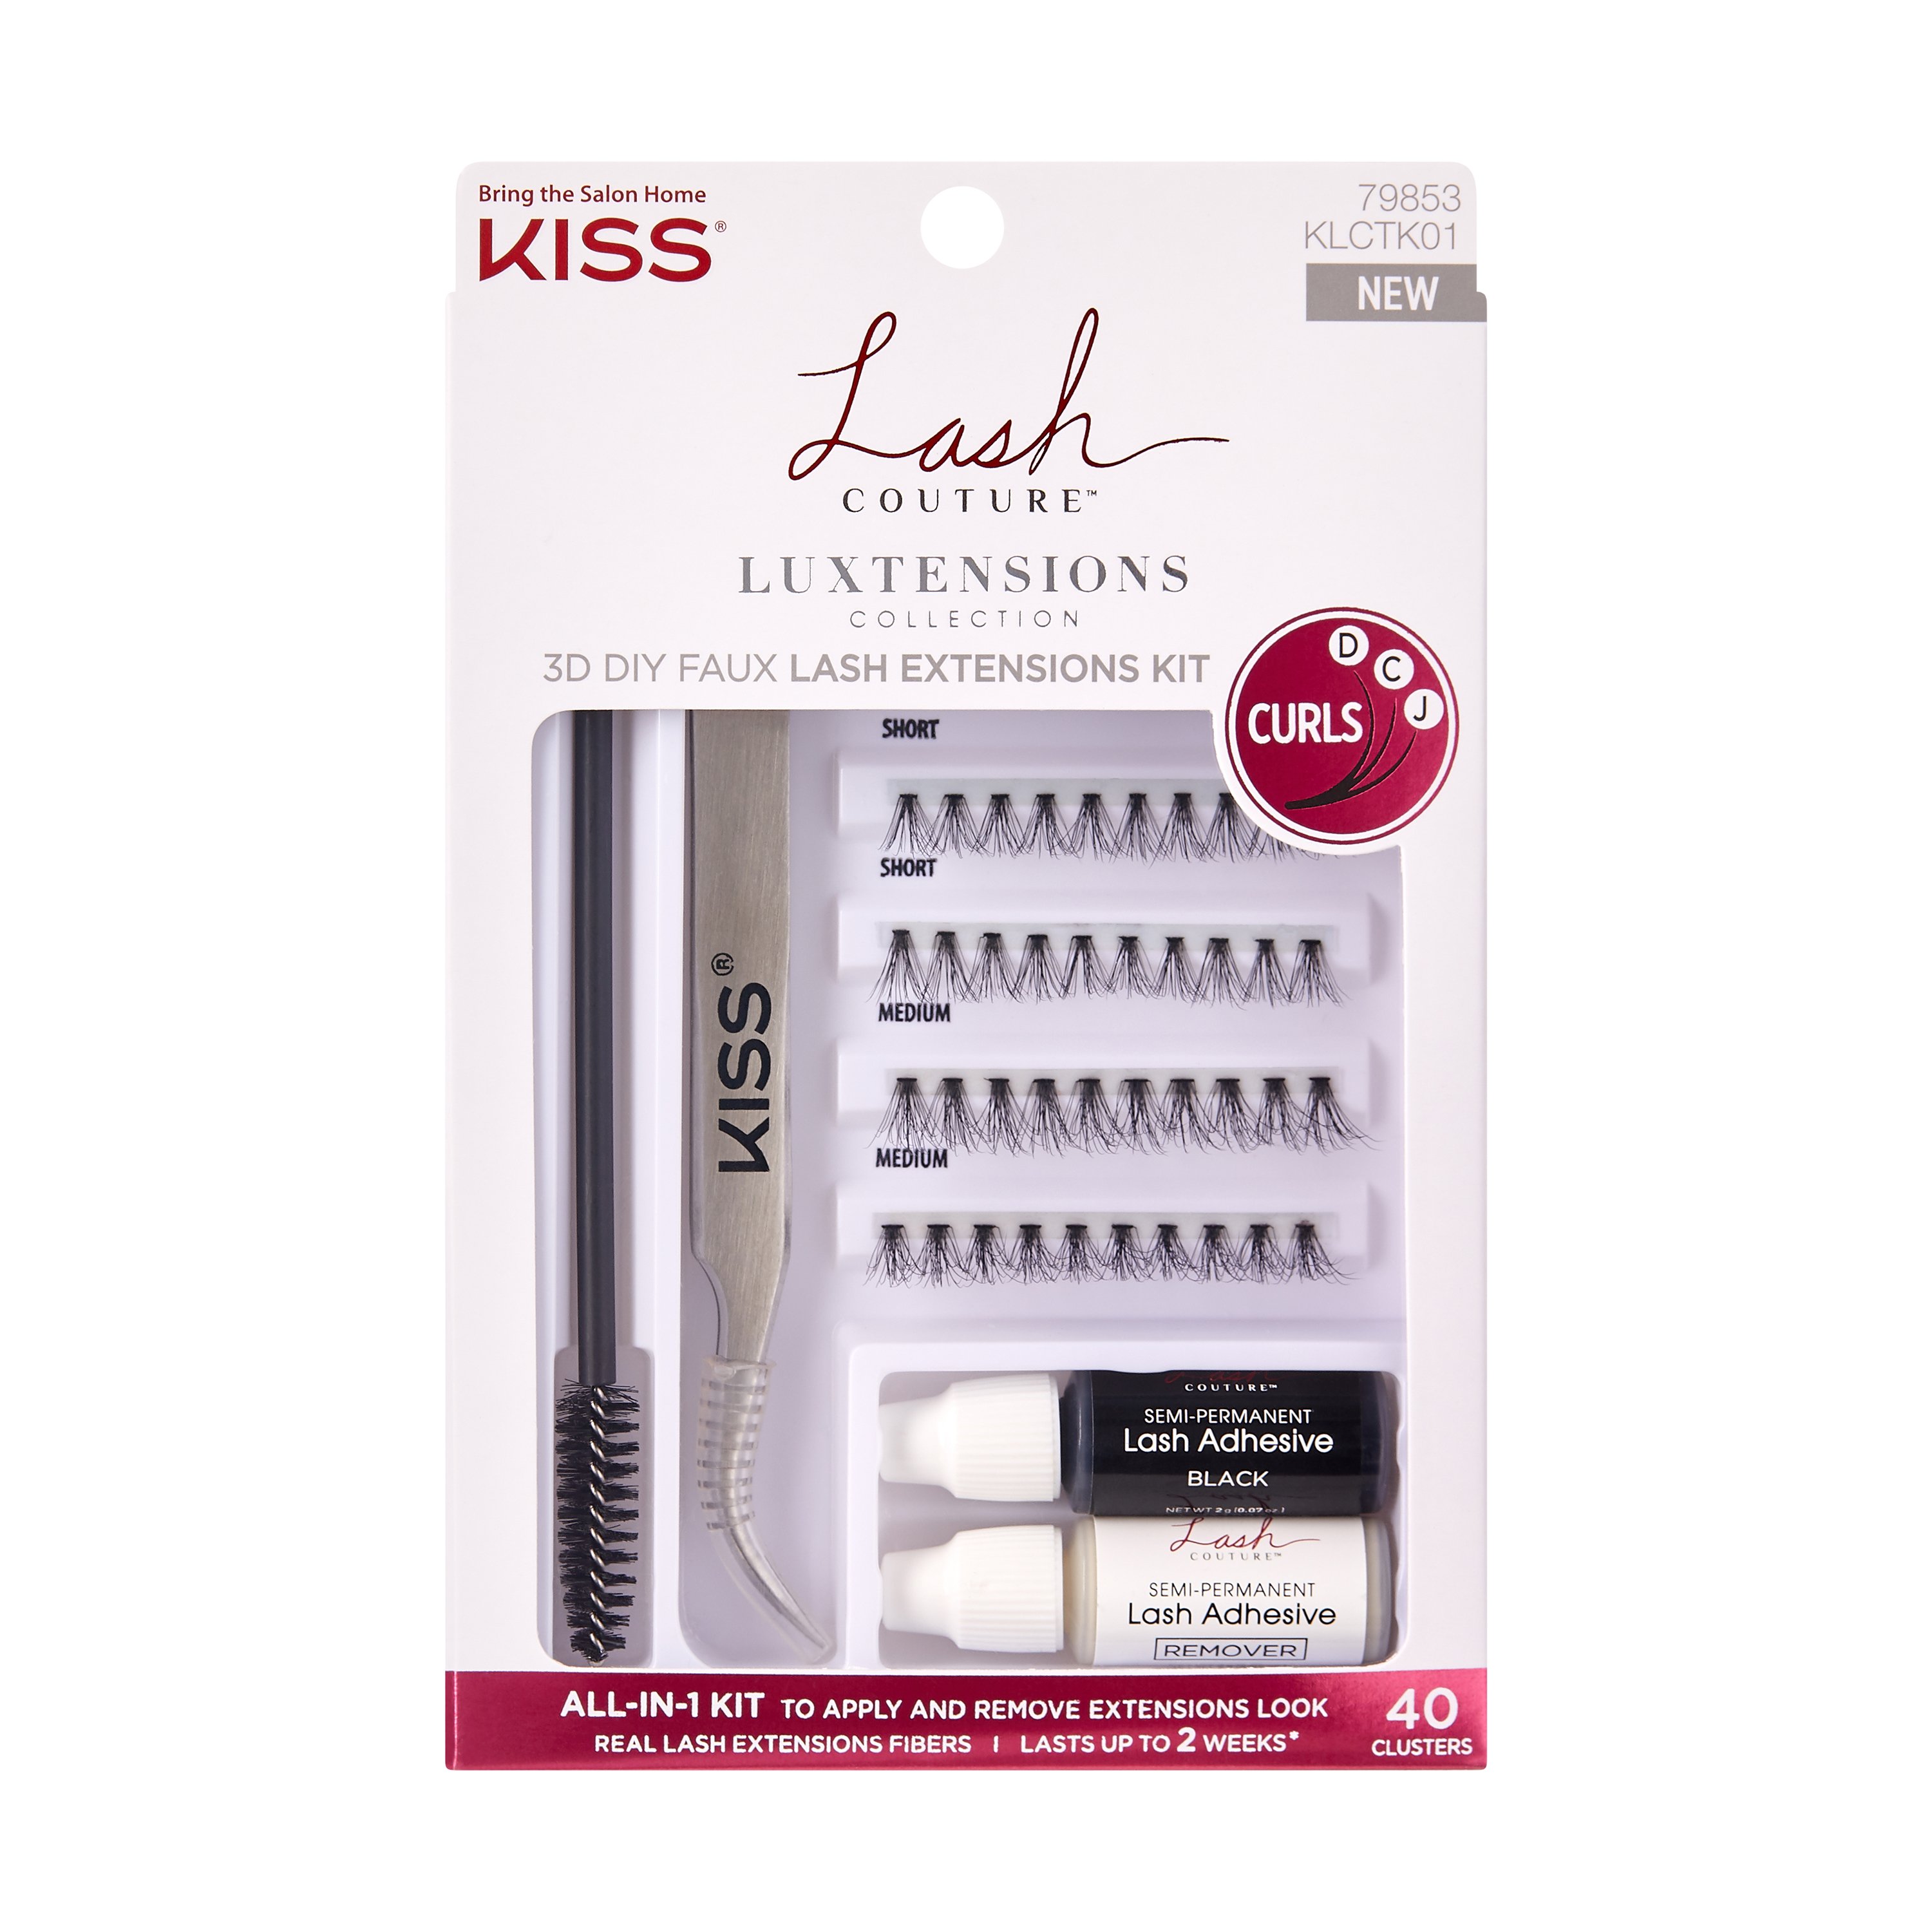 Kiss Lash Couture Faux Extensions Kit Makeup At H E B